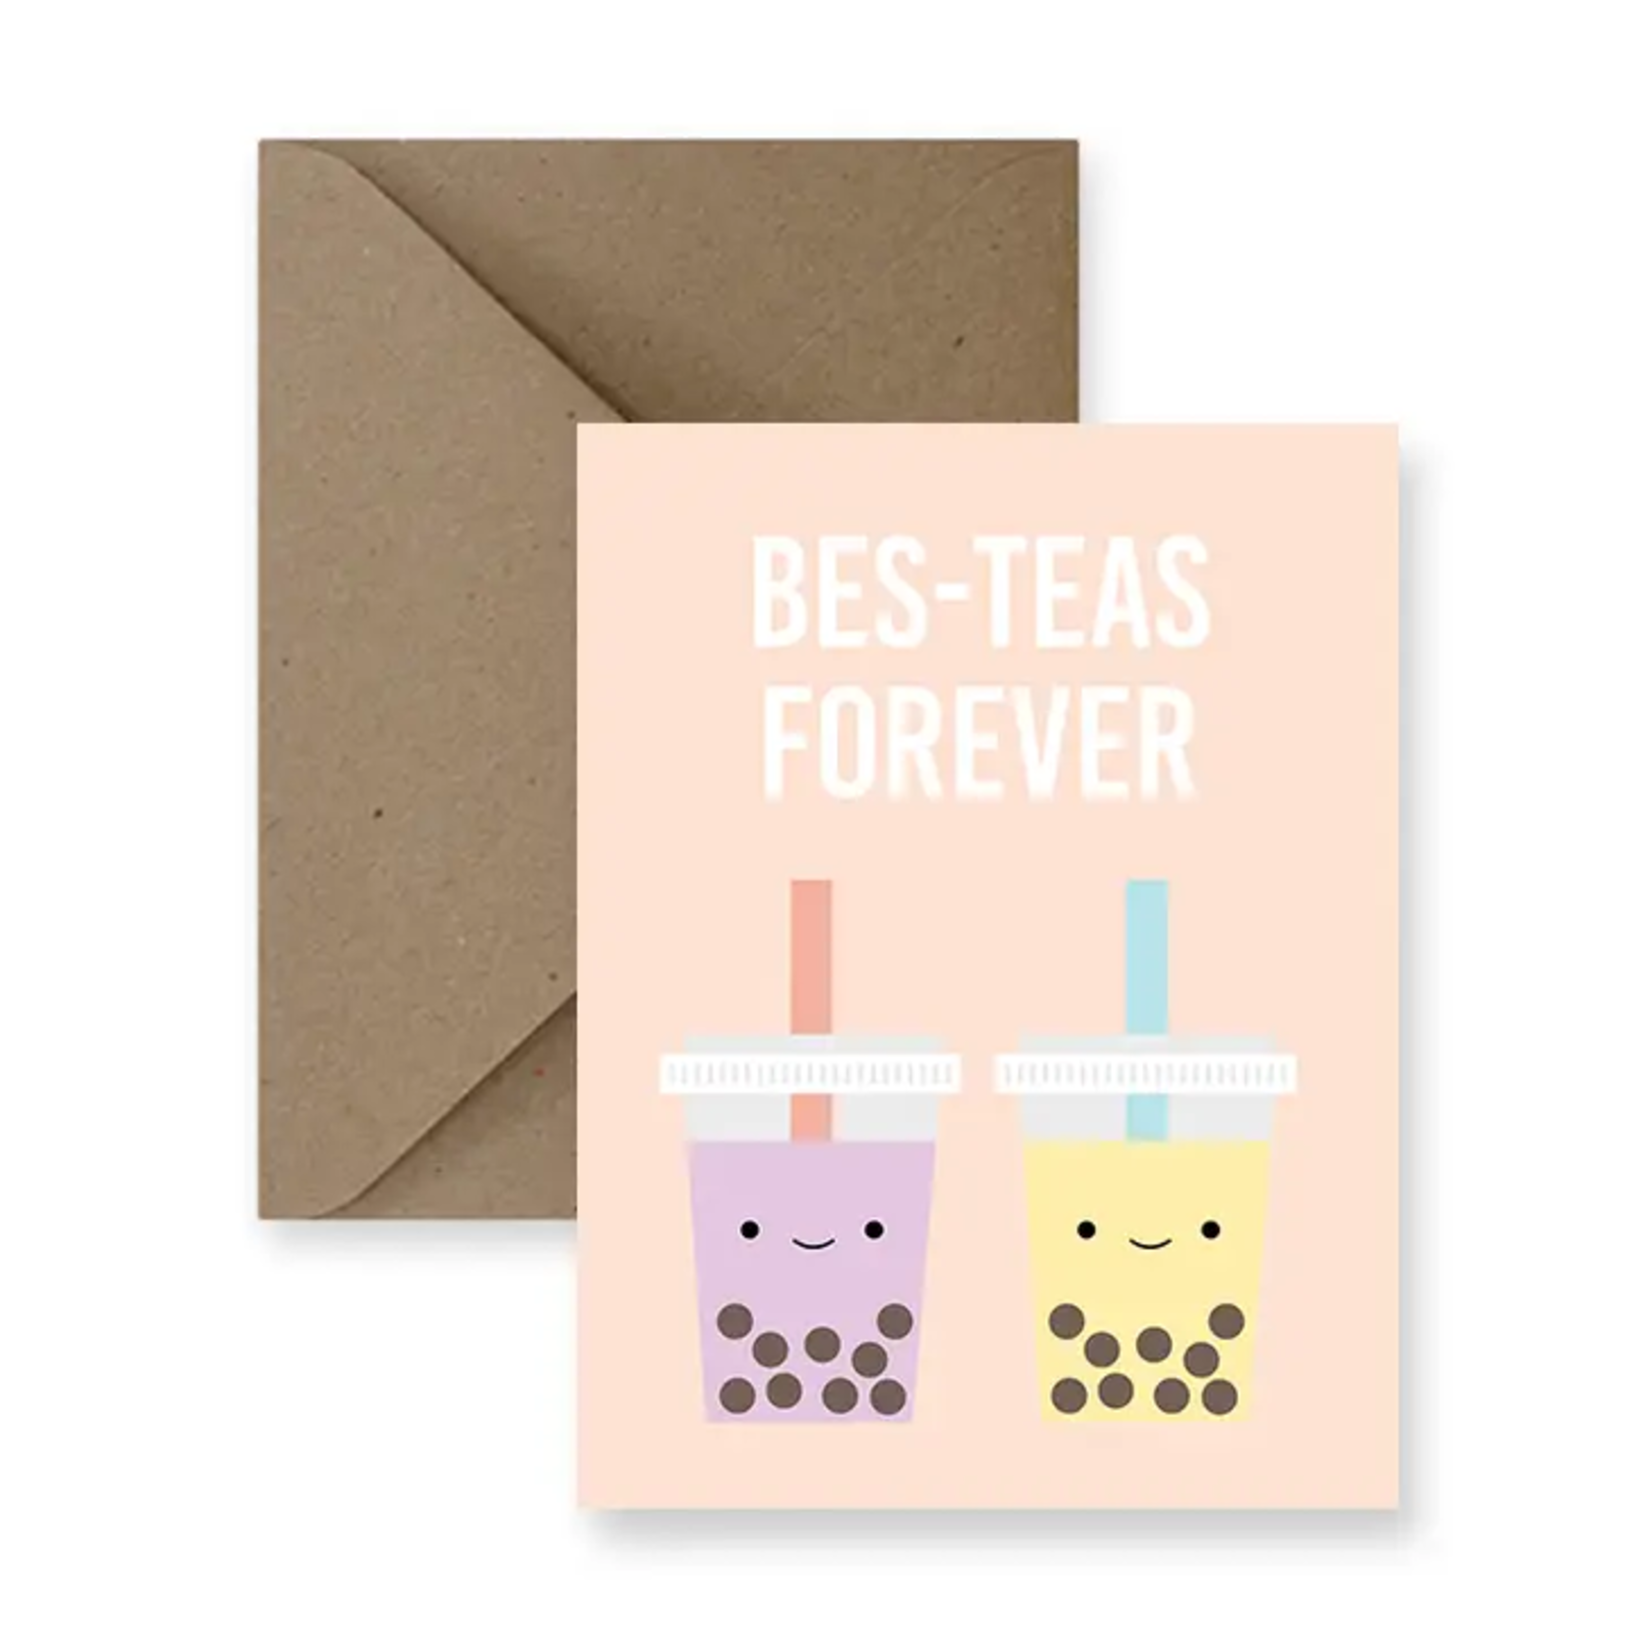 Bes-teas Forever Card